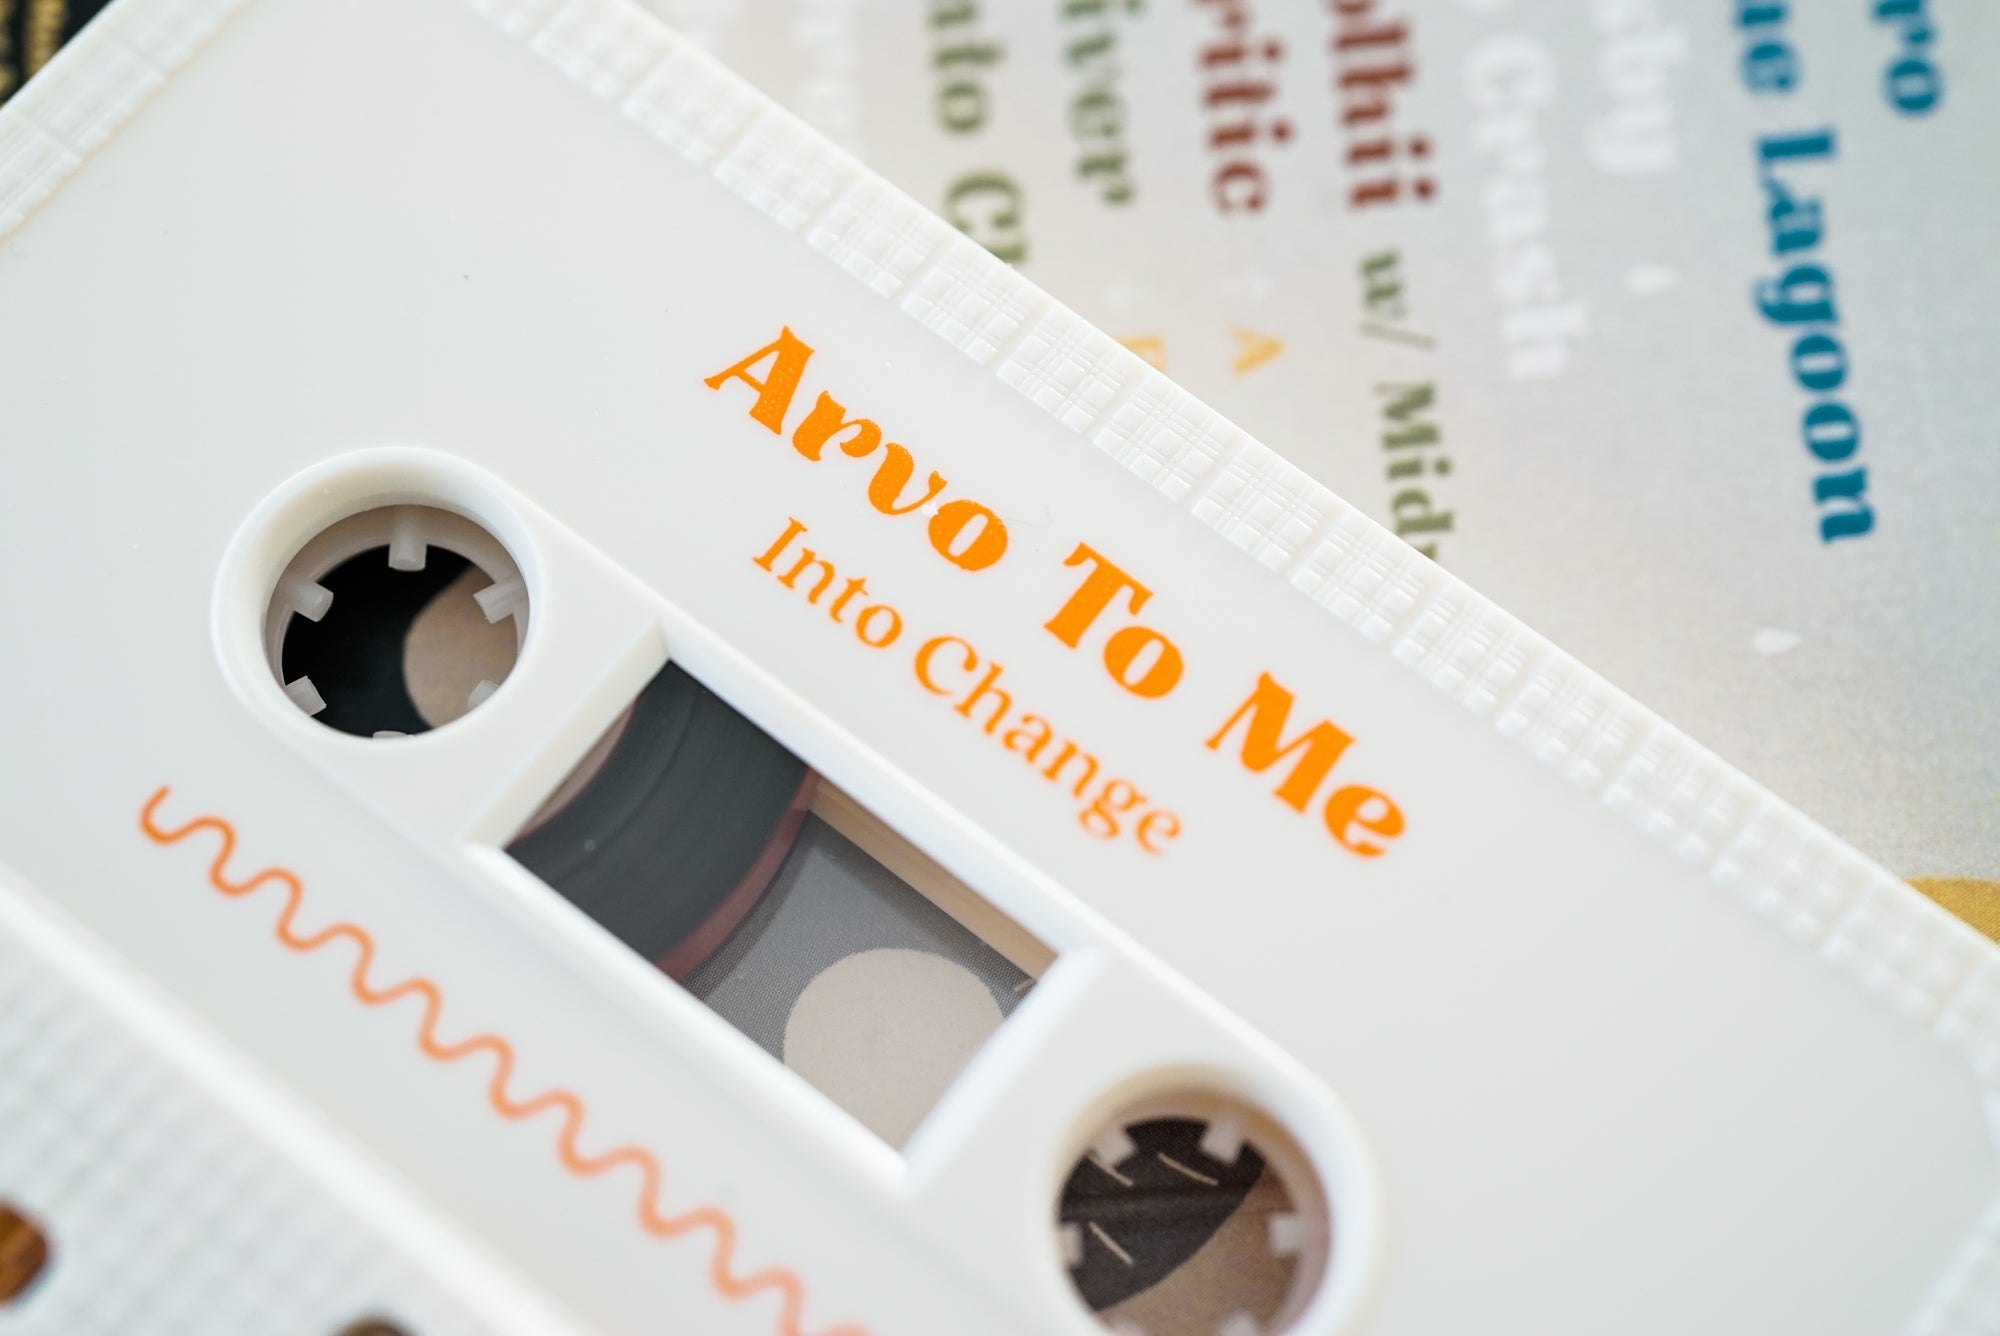 Arvo to me - Into Change - Inner Ocean Records